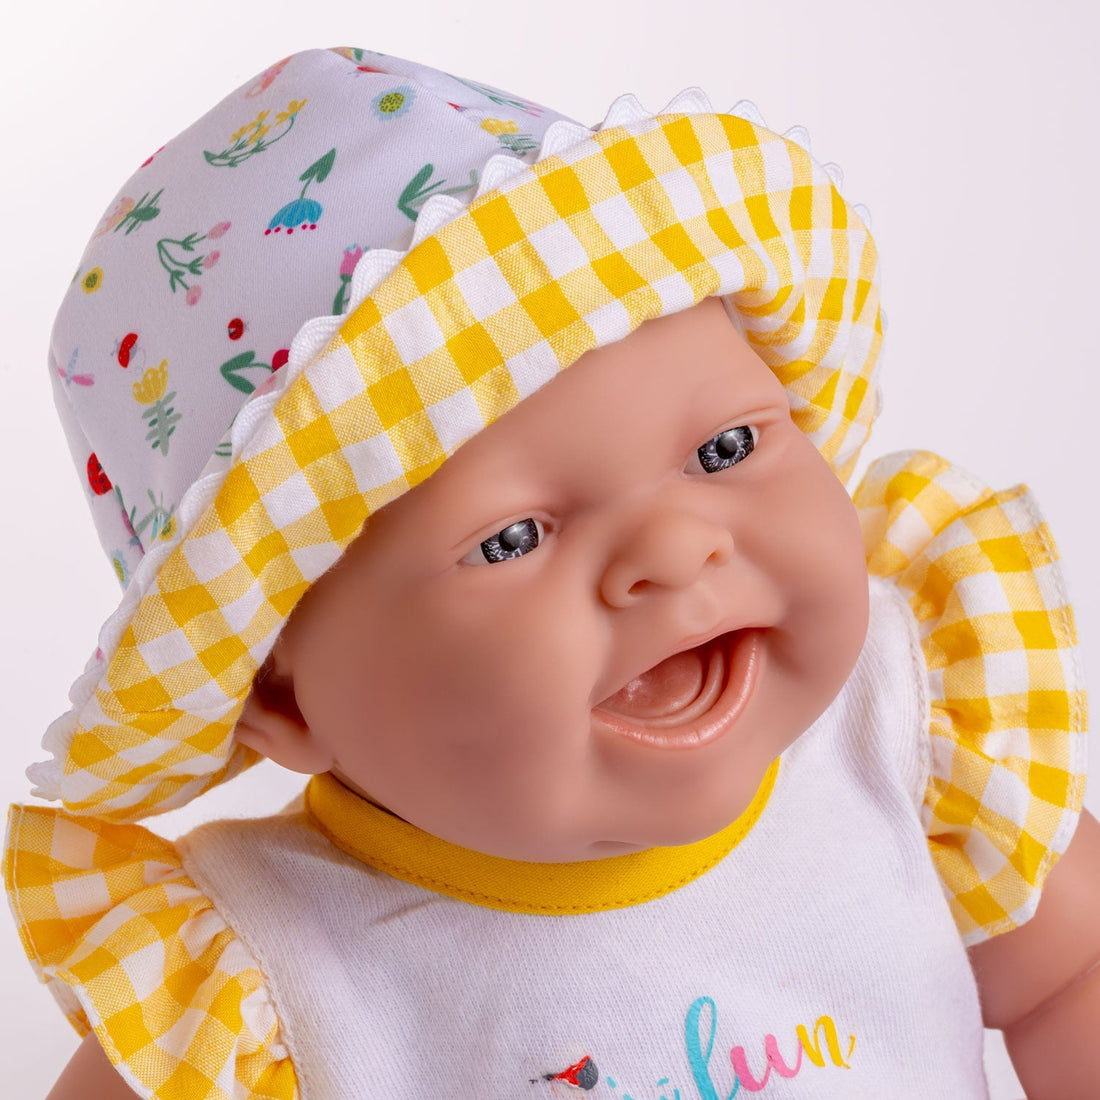 Lola Baby Doll - Lemon Twist